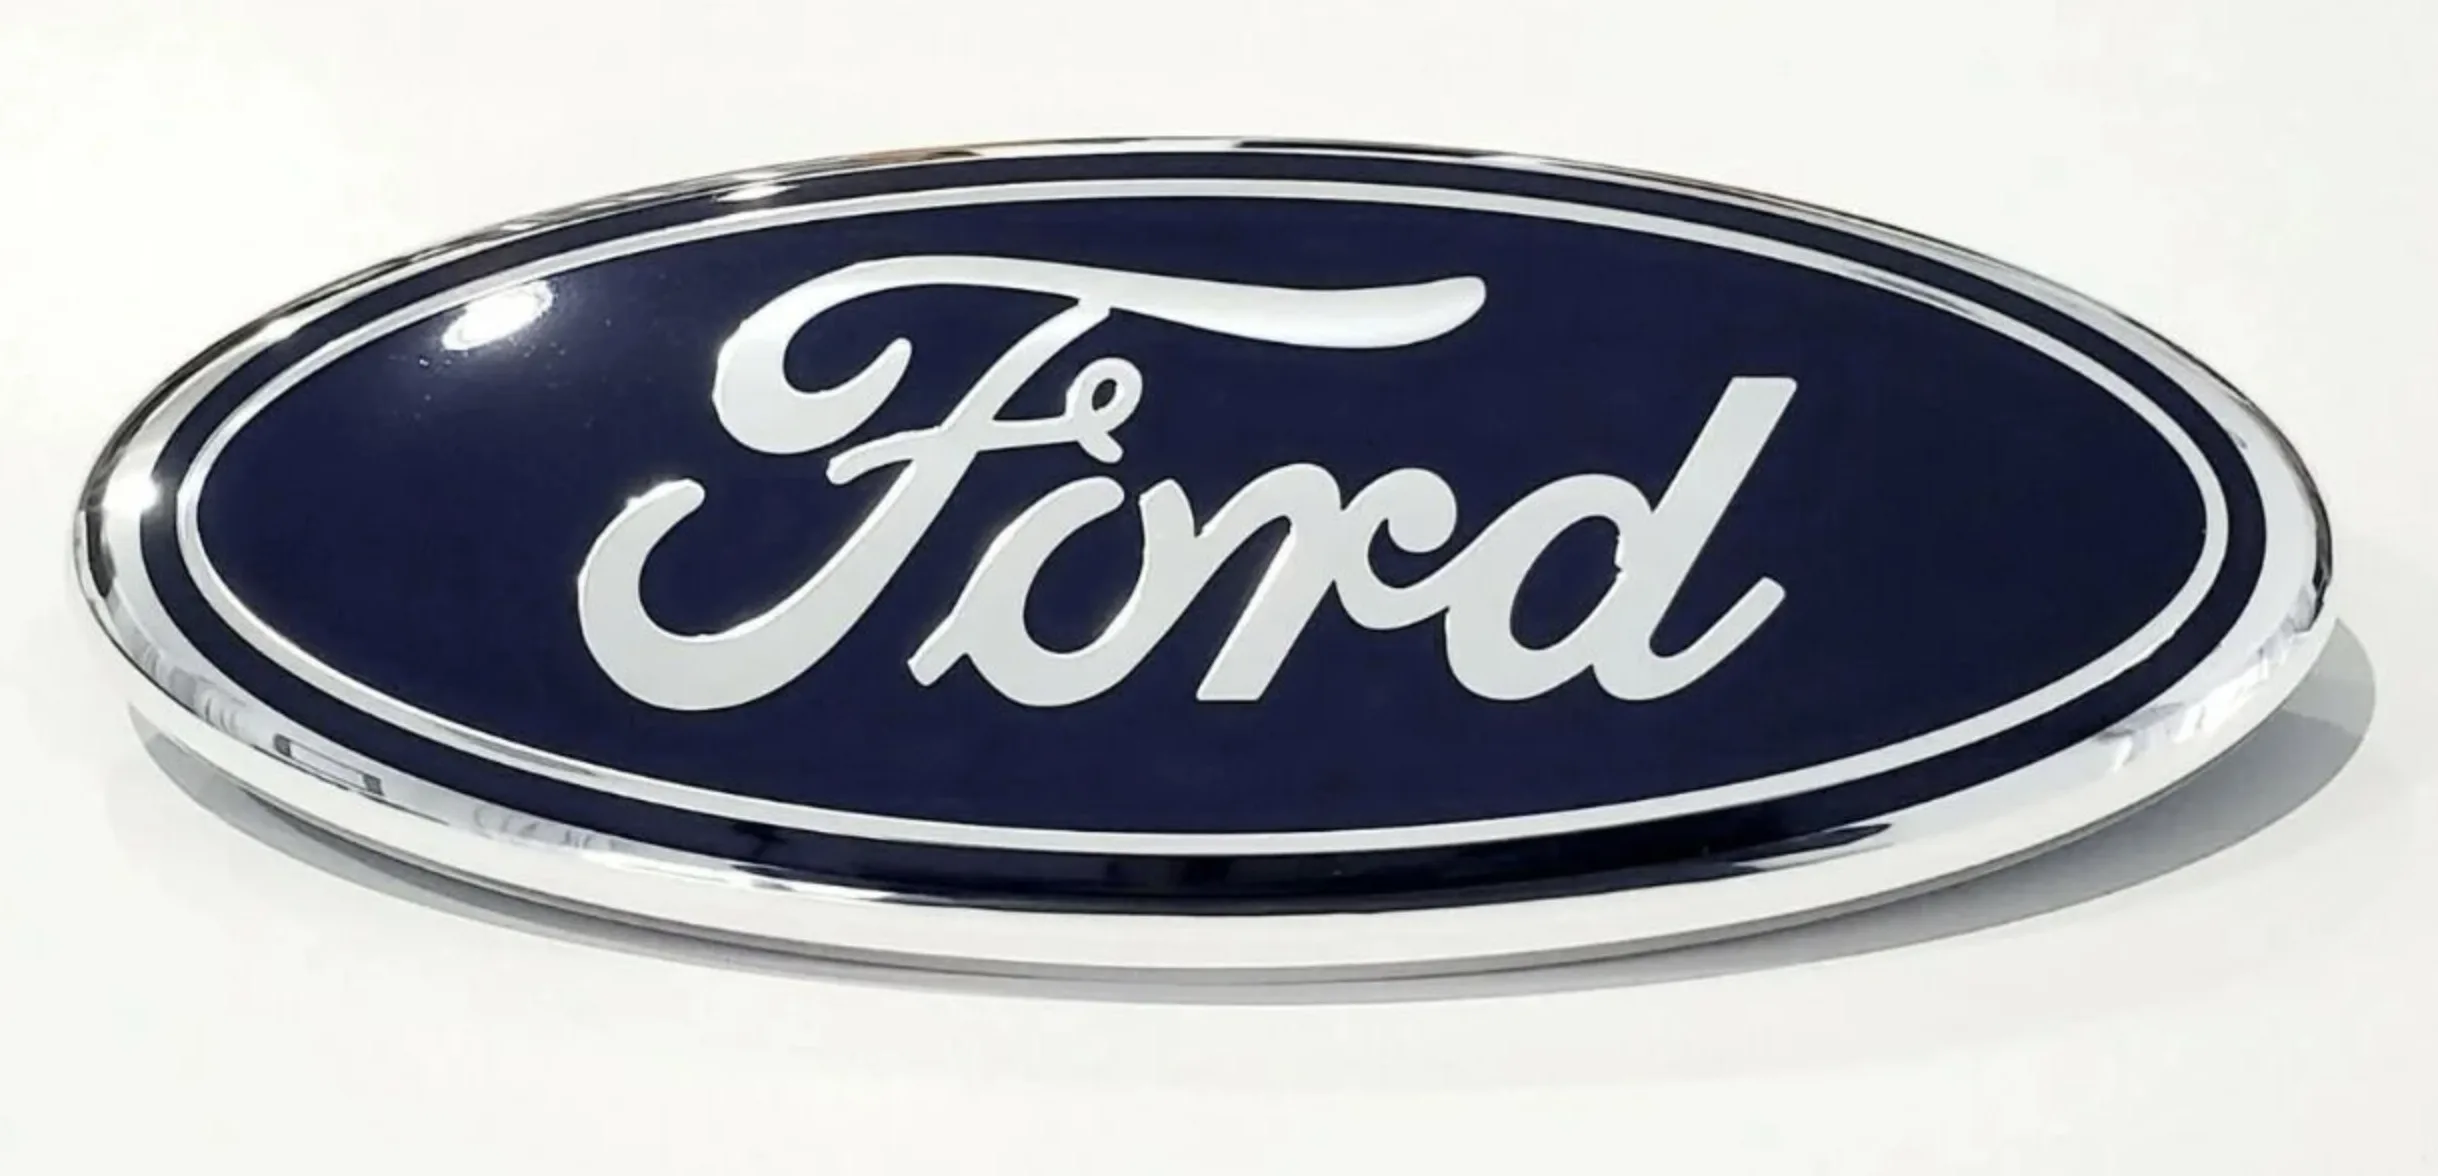 https://fordpartsone.com/wp-content/uploads/2021/01/Ford-Front-Grille-Blue-Oval-Emblem-Escape-Taurus-Fusion-Focus-Explorer-Image-jpg.webp